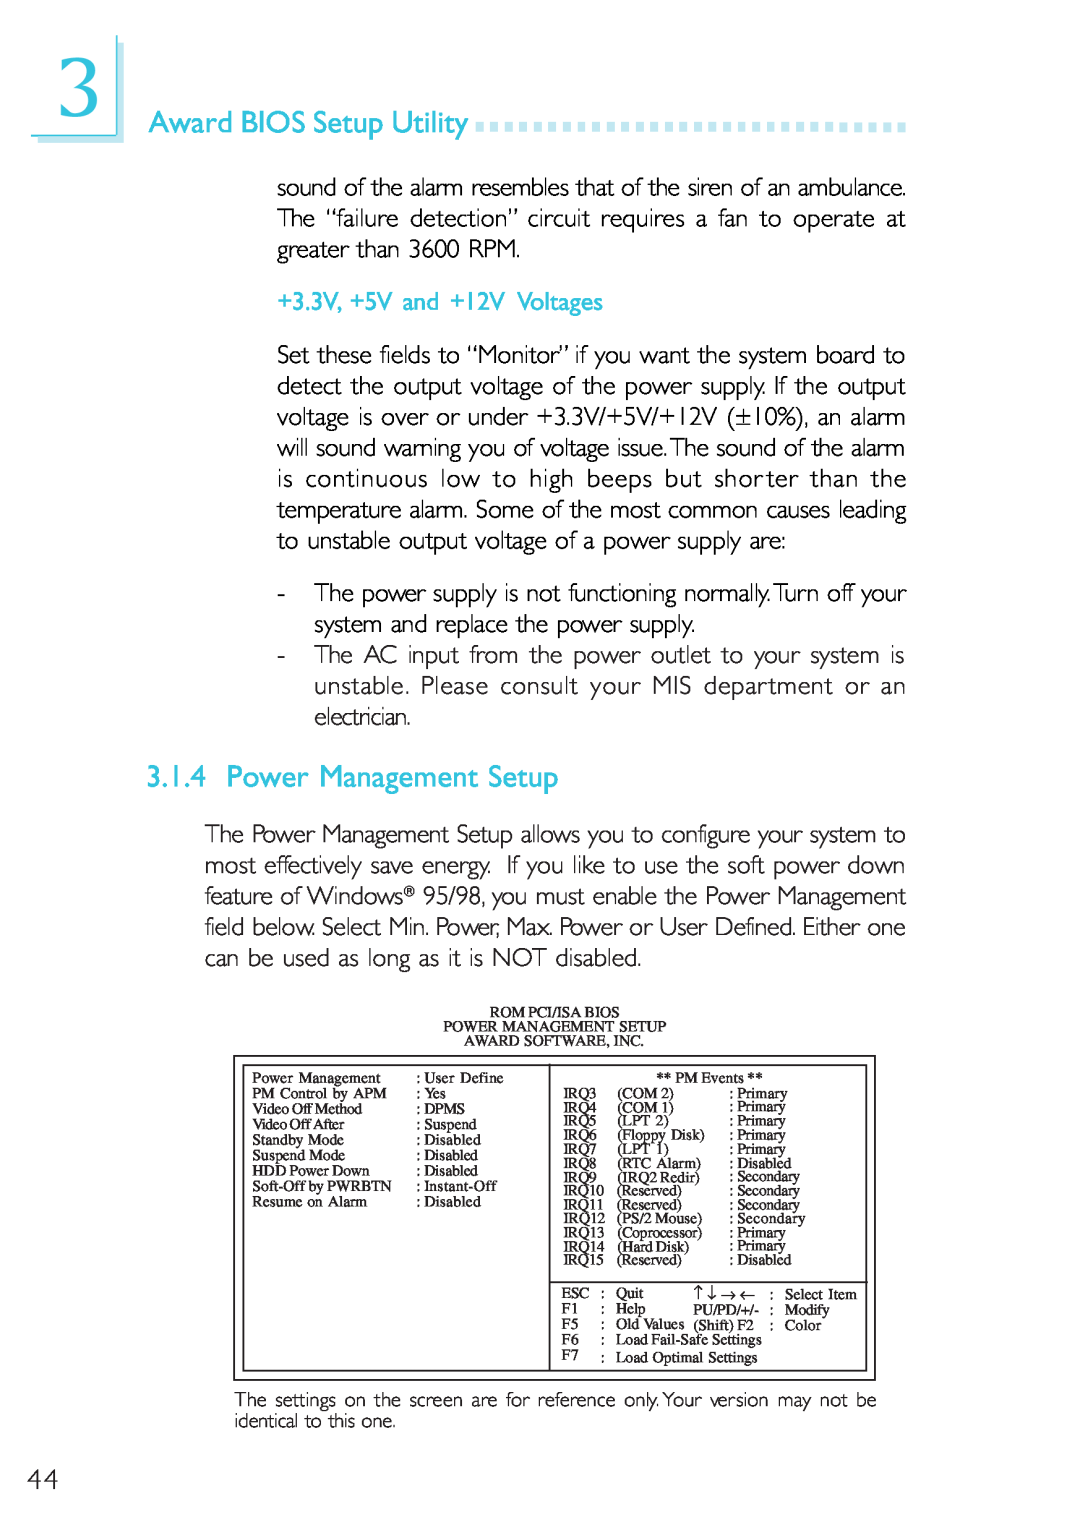 Microsoft G7VP2 manual Power Management Setup, +3.3V, +5V and +12V Voltages, Award BIOS Setup Utility 